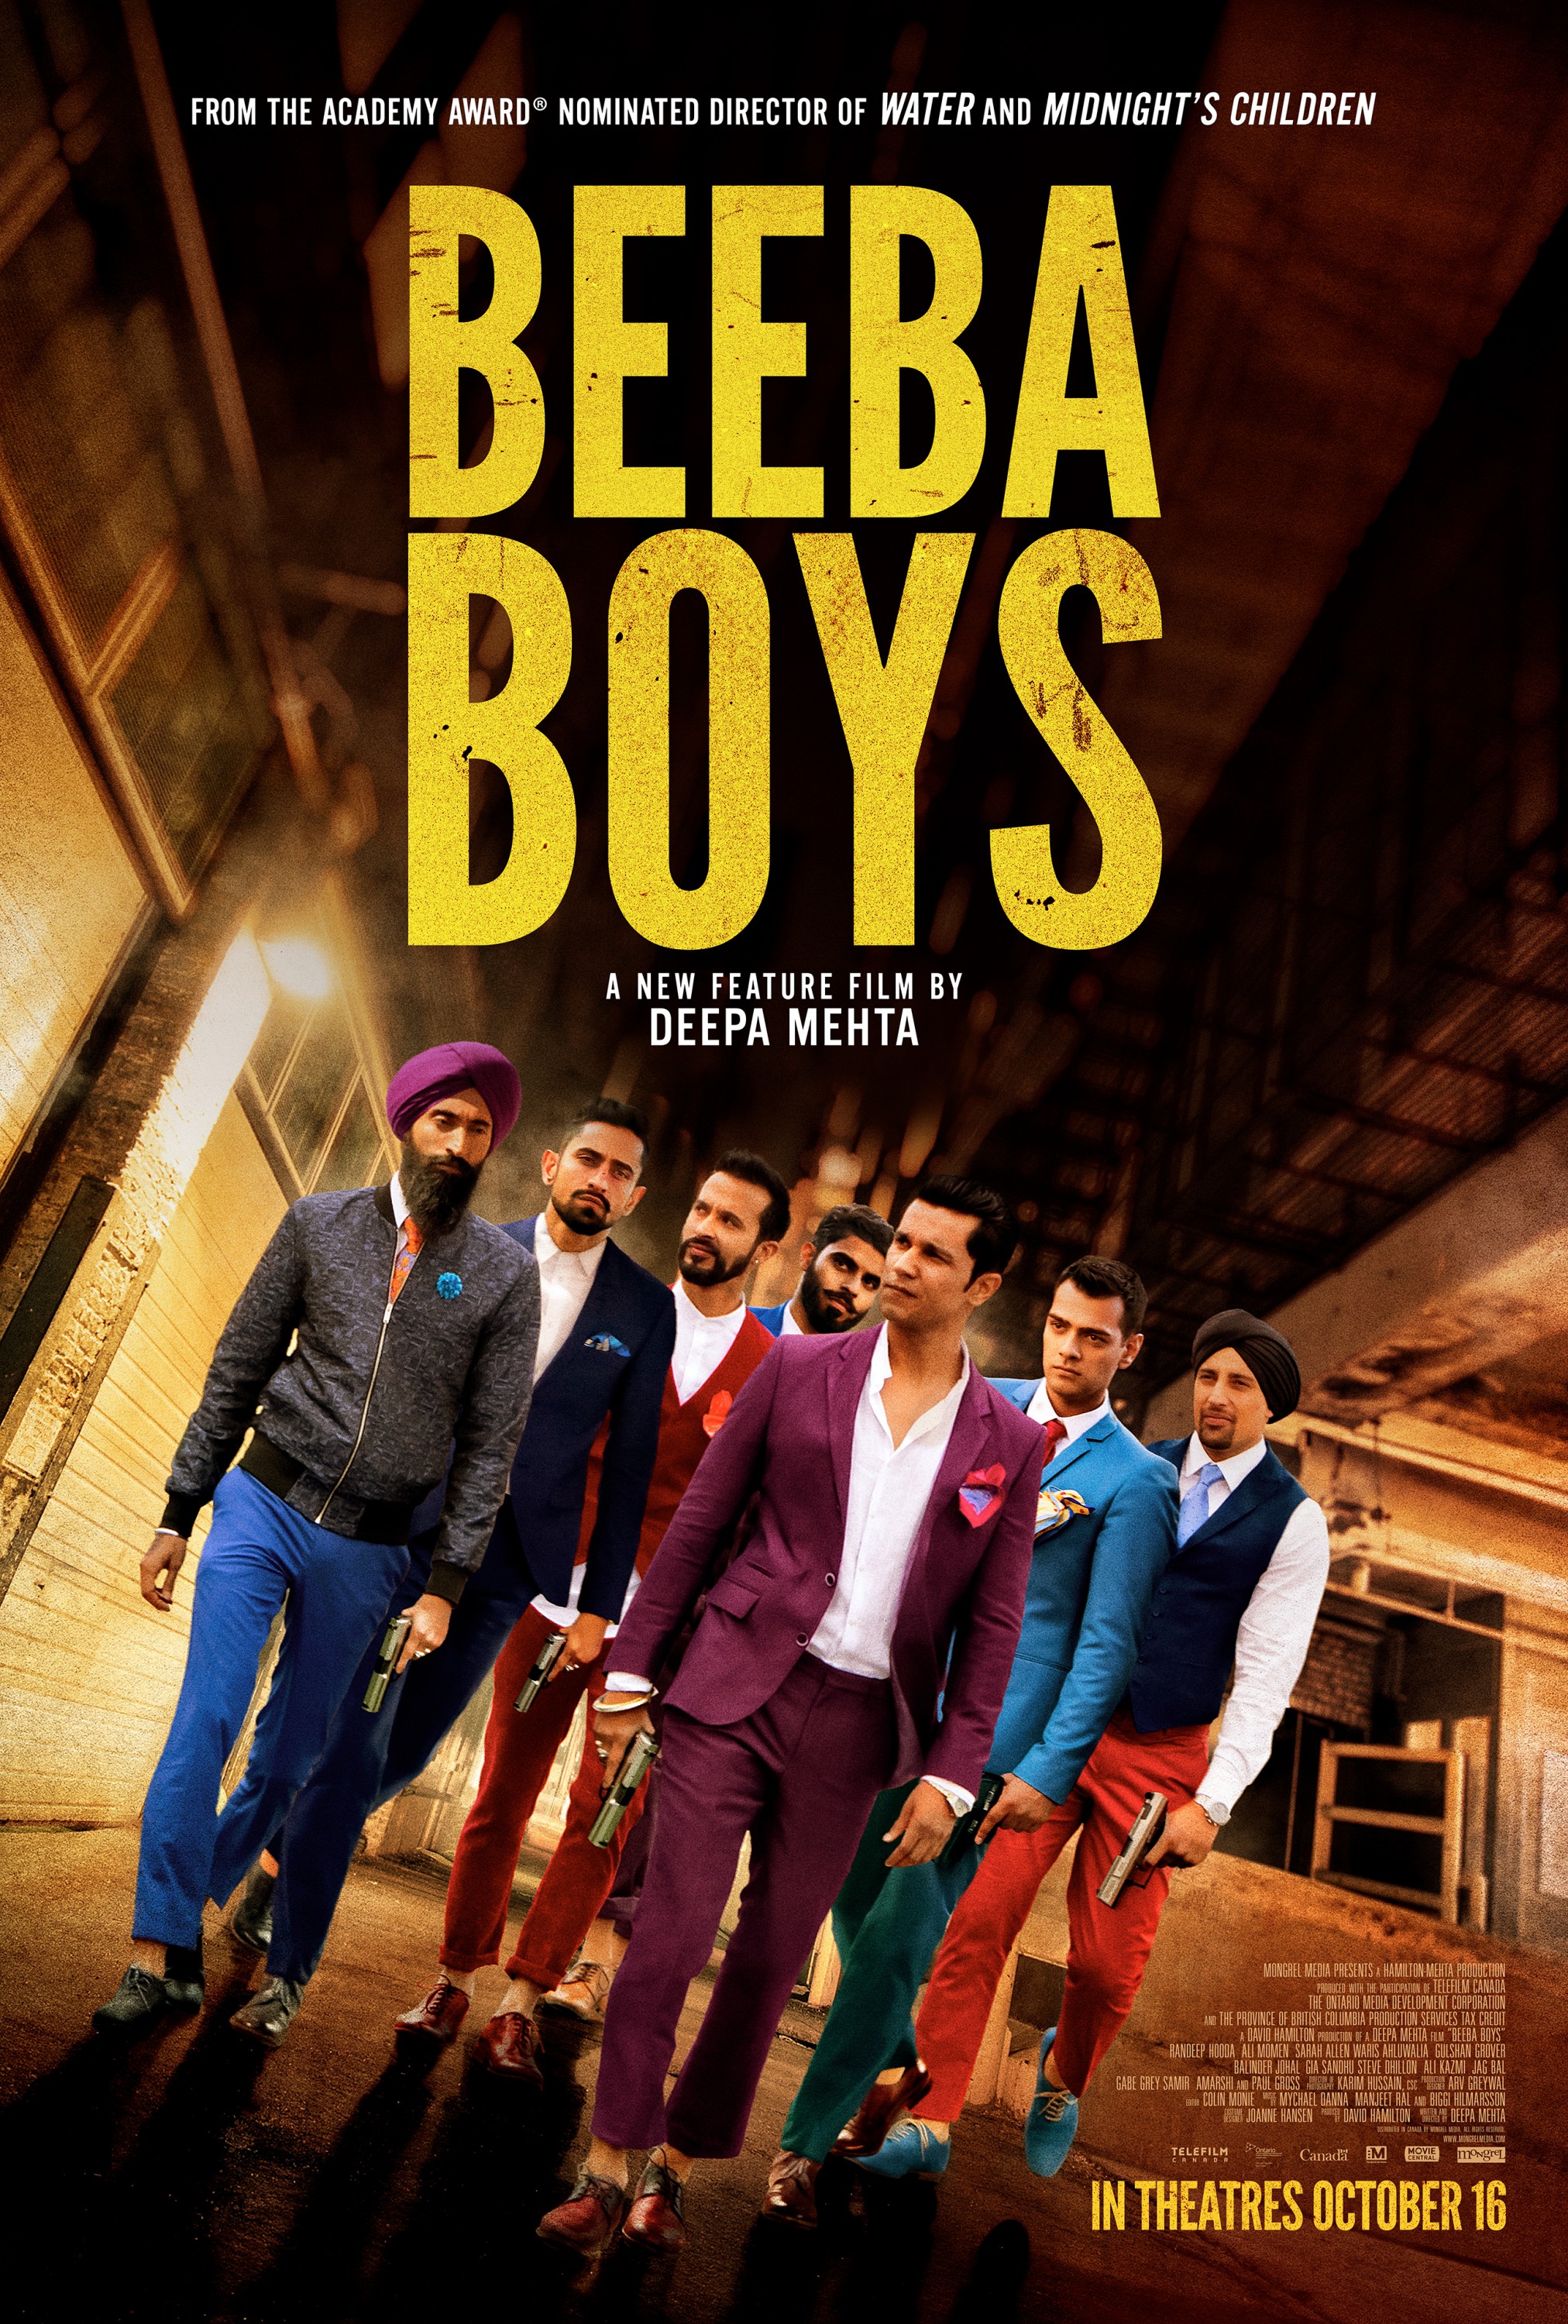 Mega Sized Movie Poster Image for Beeba Boys 